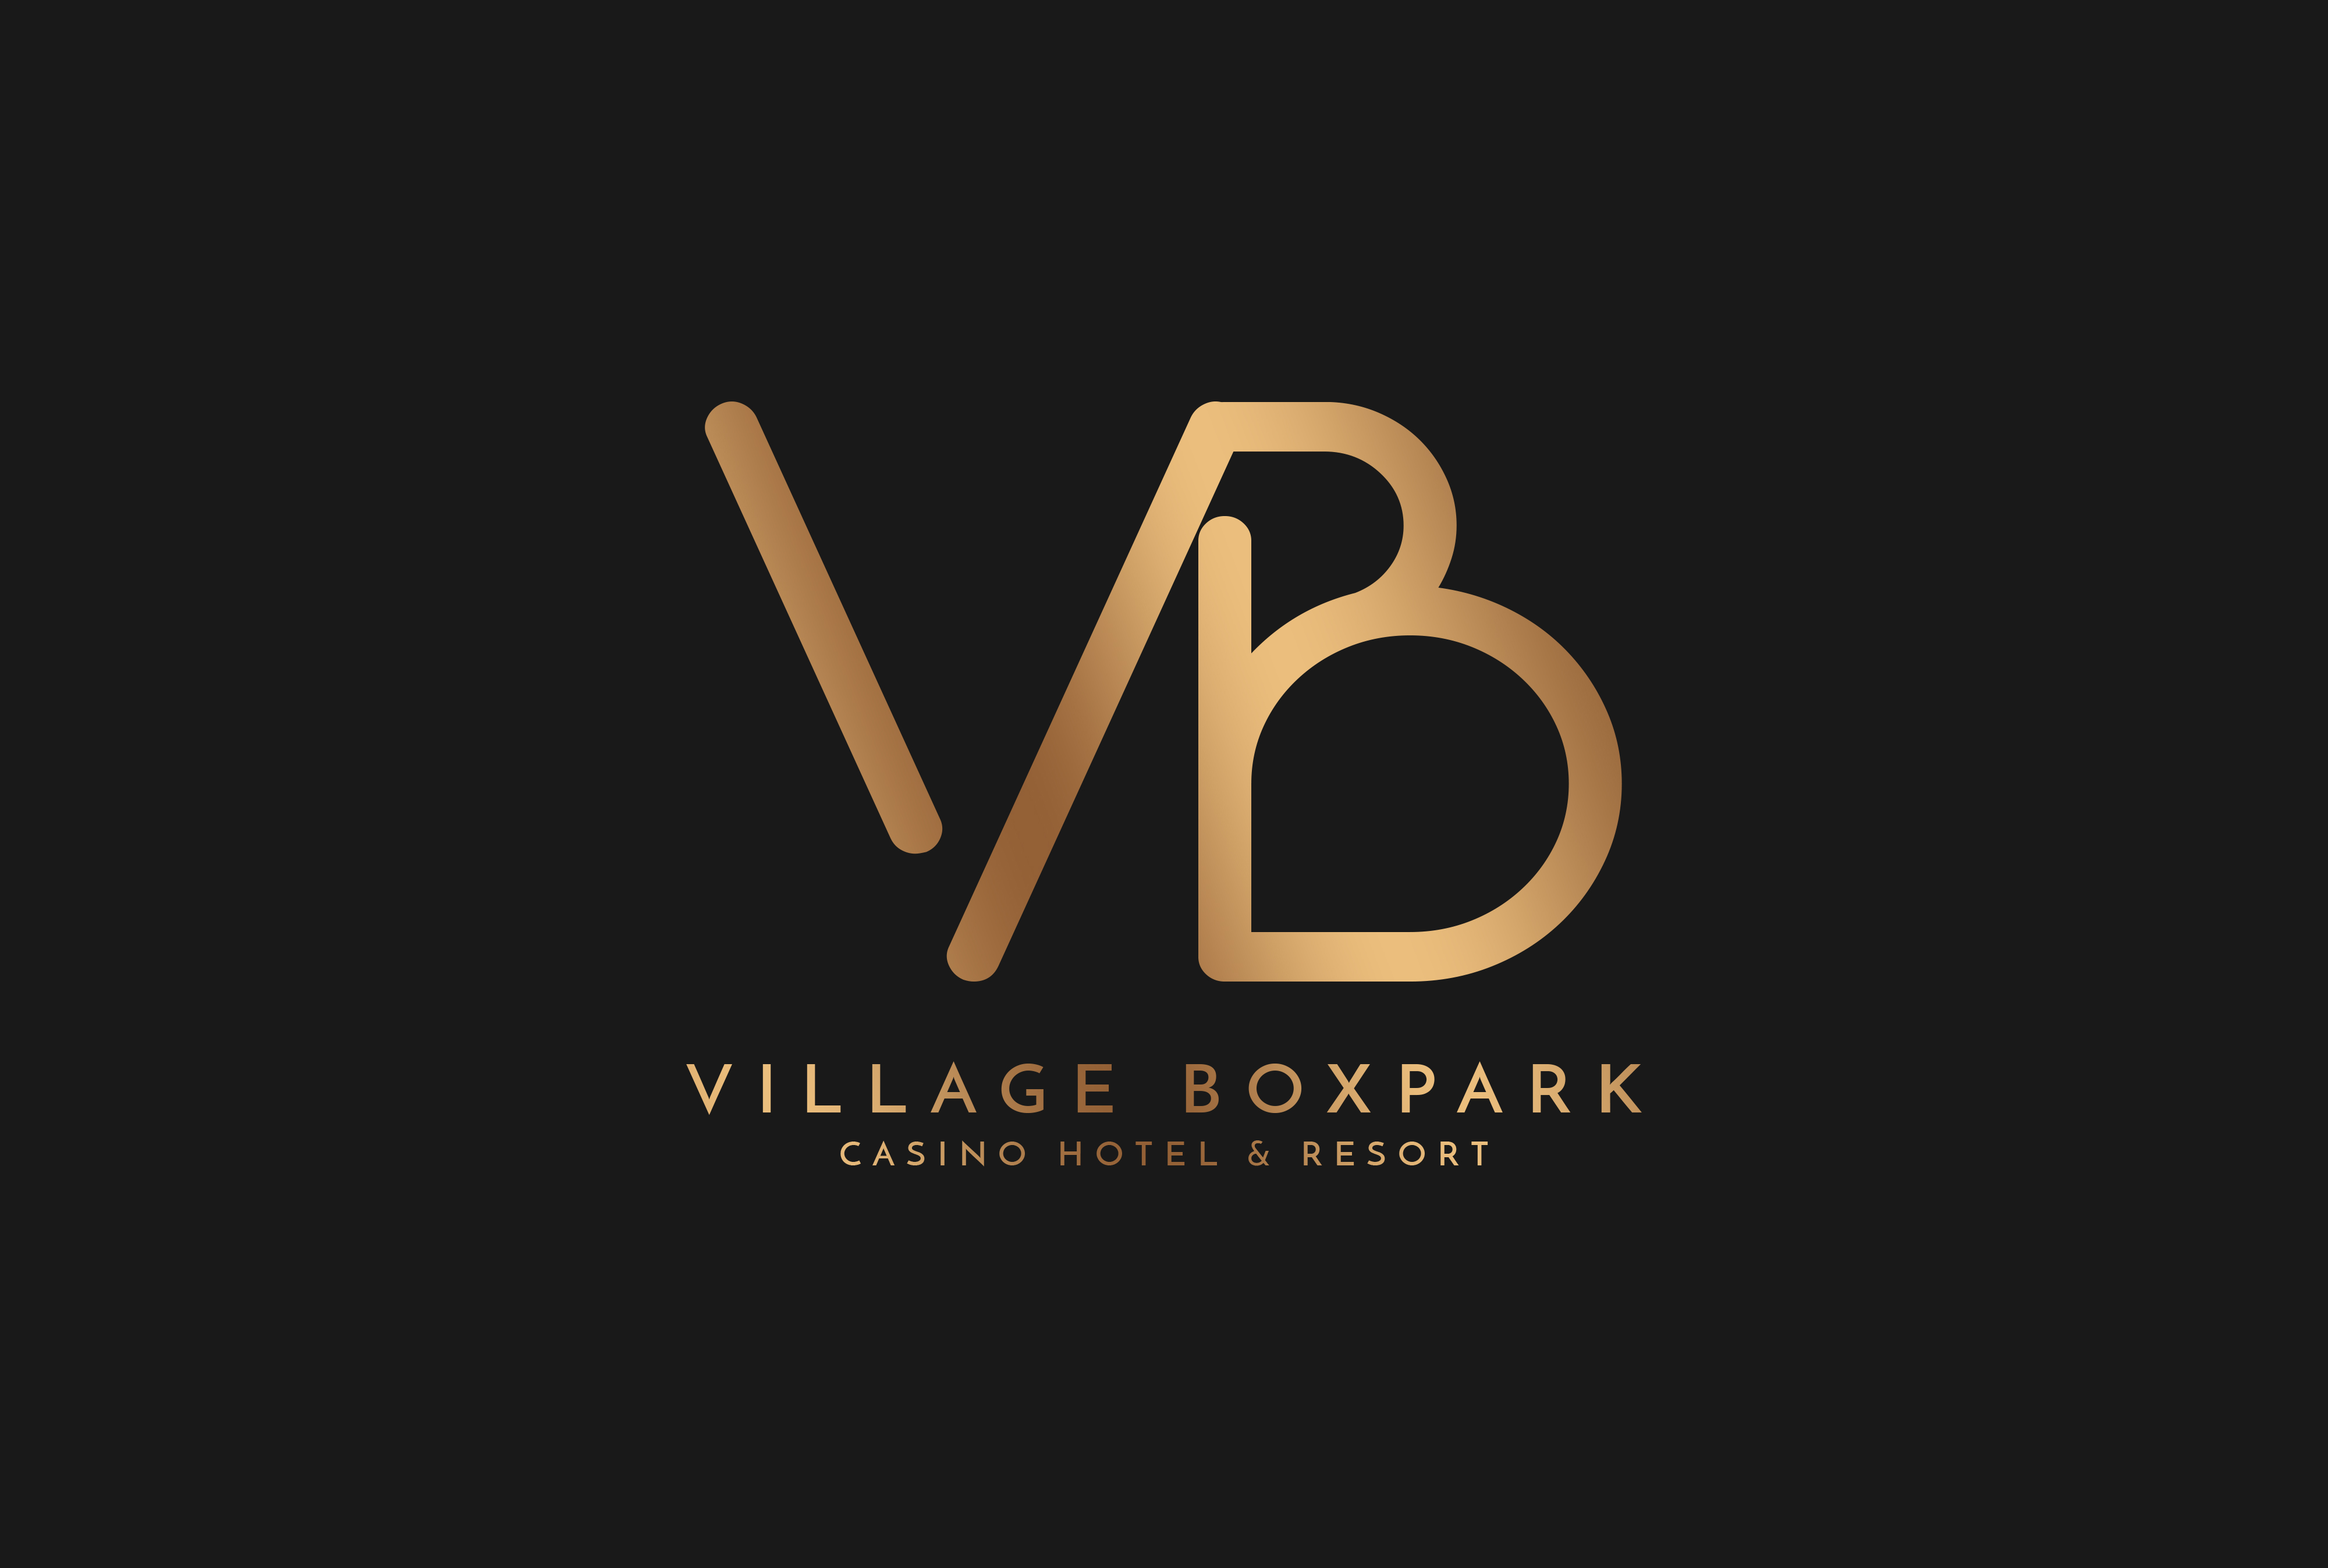 Village Boxpark Casino Hotel & Resort